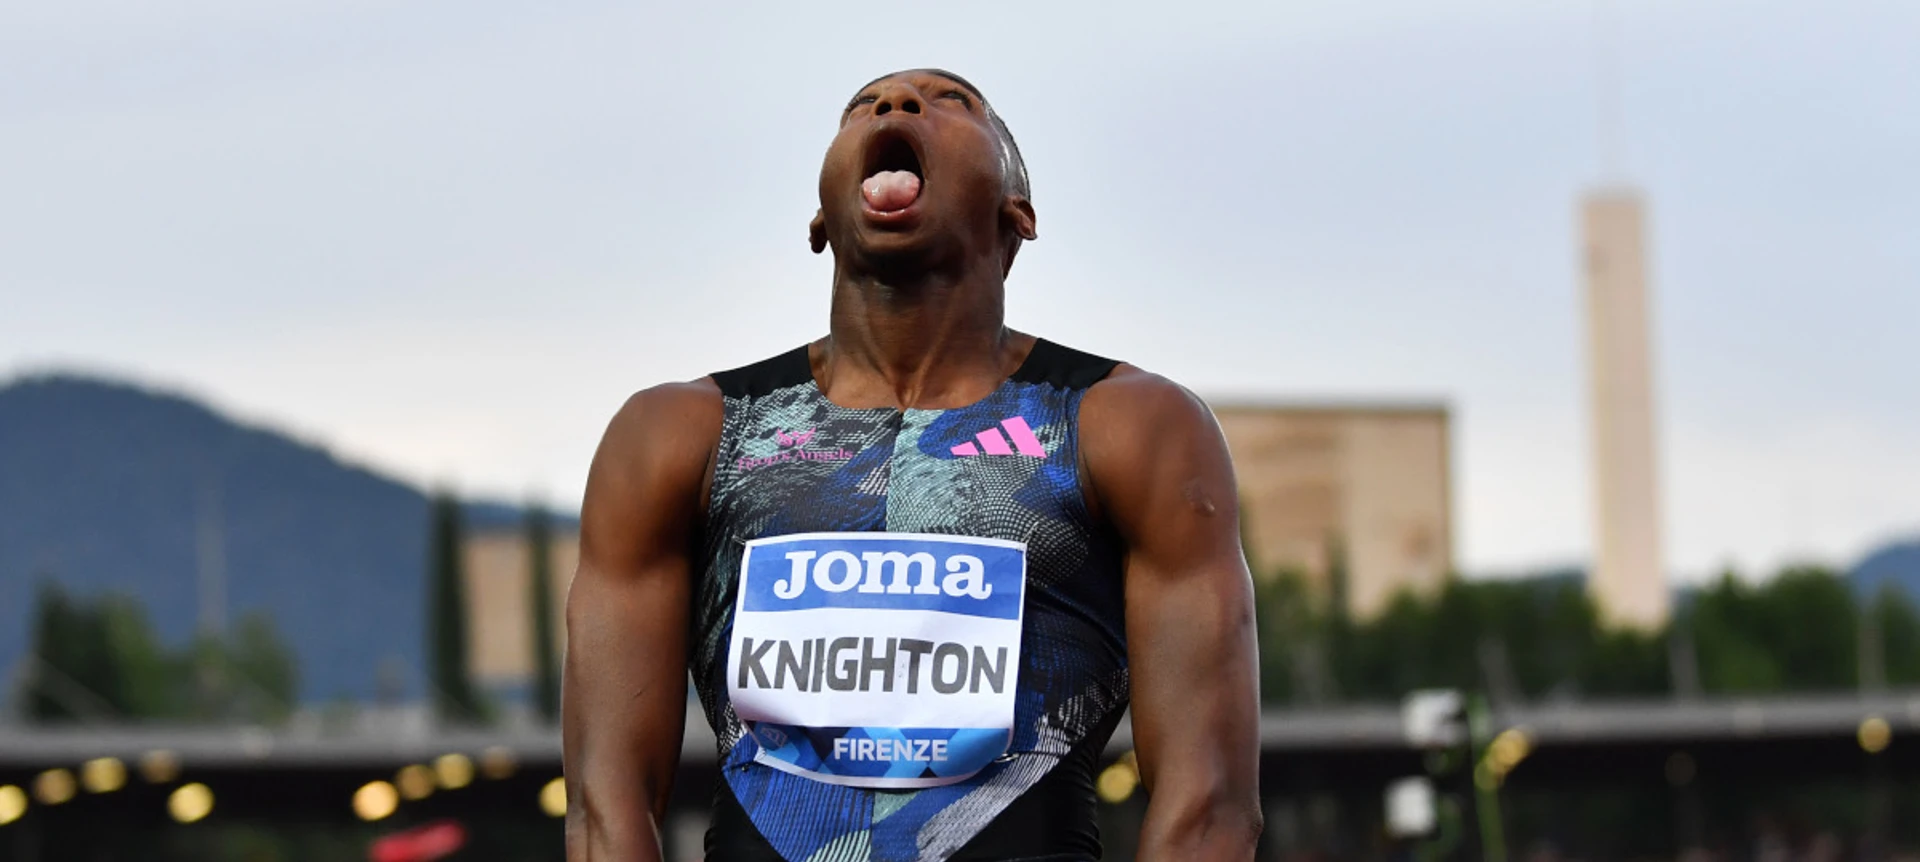 US sprinter Knighton cleared for trials despite positive test